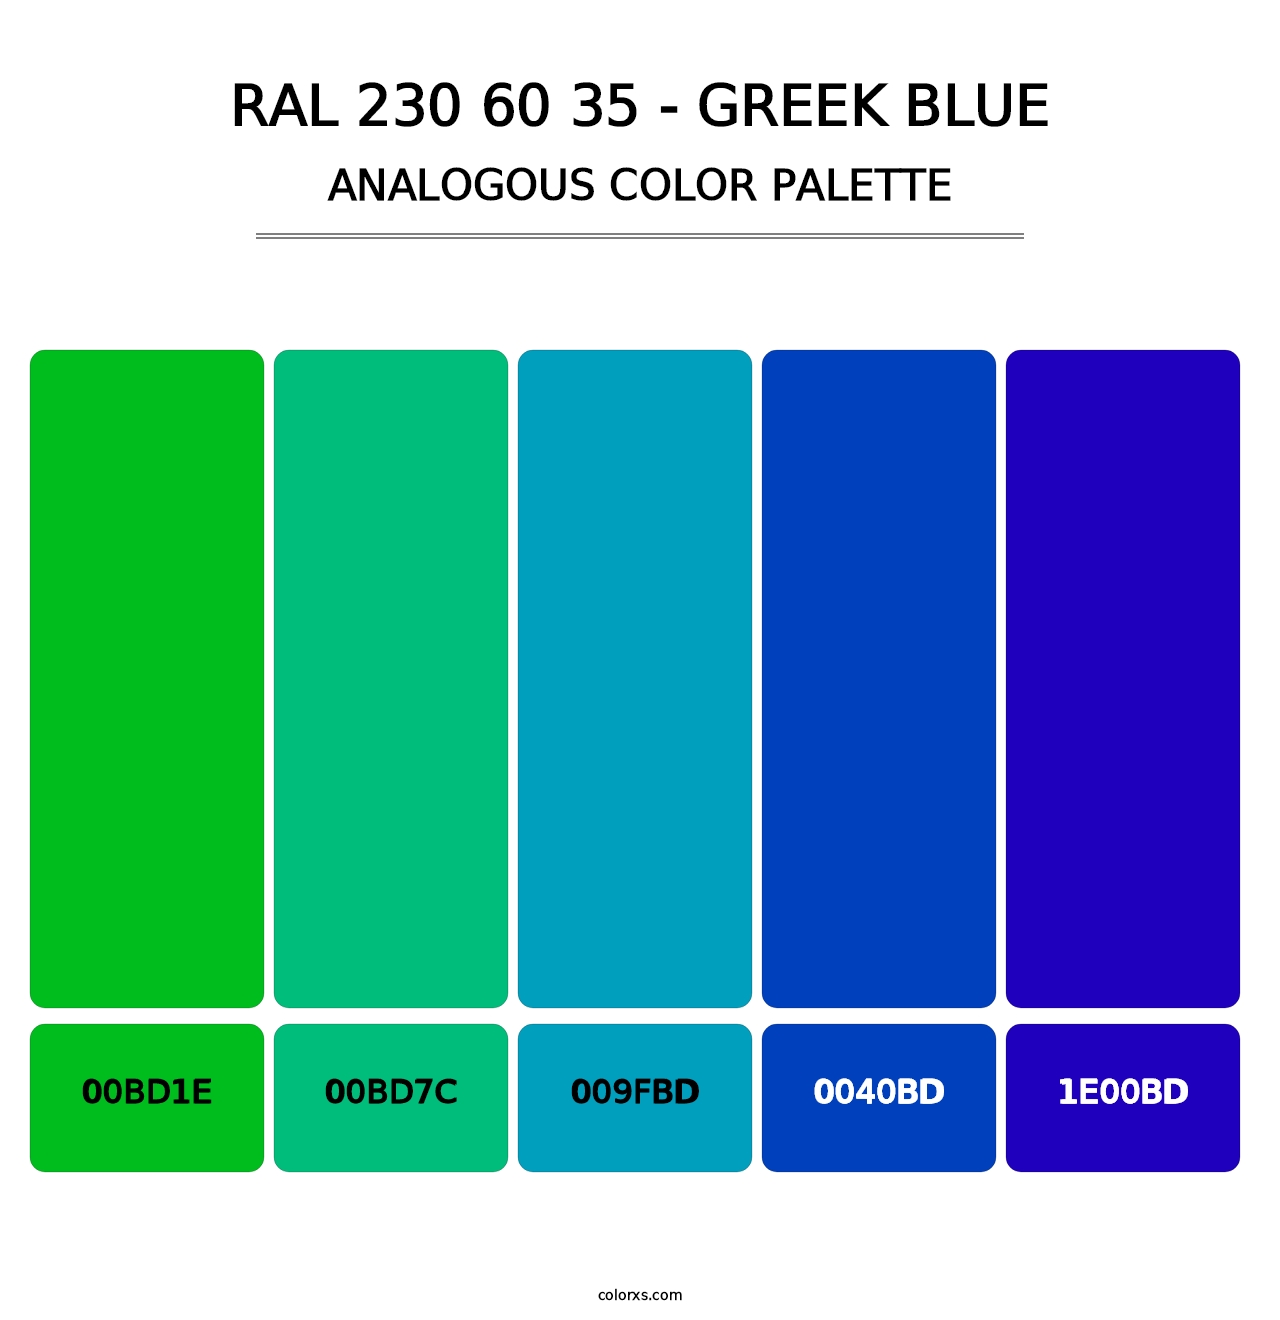 RAL 230 60 35 - Greek Blue - Analogous Color Palette